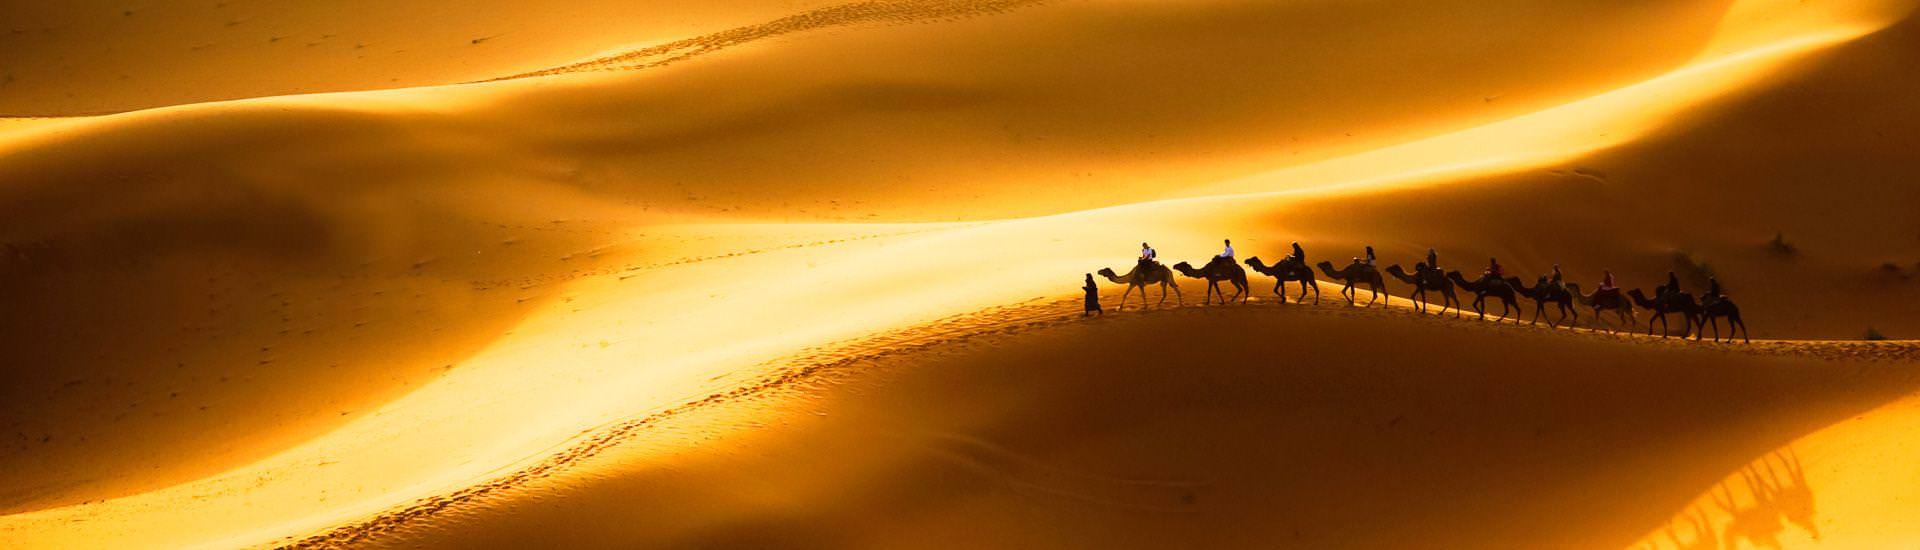 Kamelkarawane in den Sanddnen Erg Chebbi, Sahara |  Roberto Caucino, iStockphoto.com / Chamleon